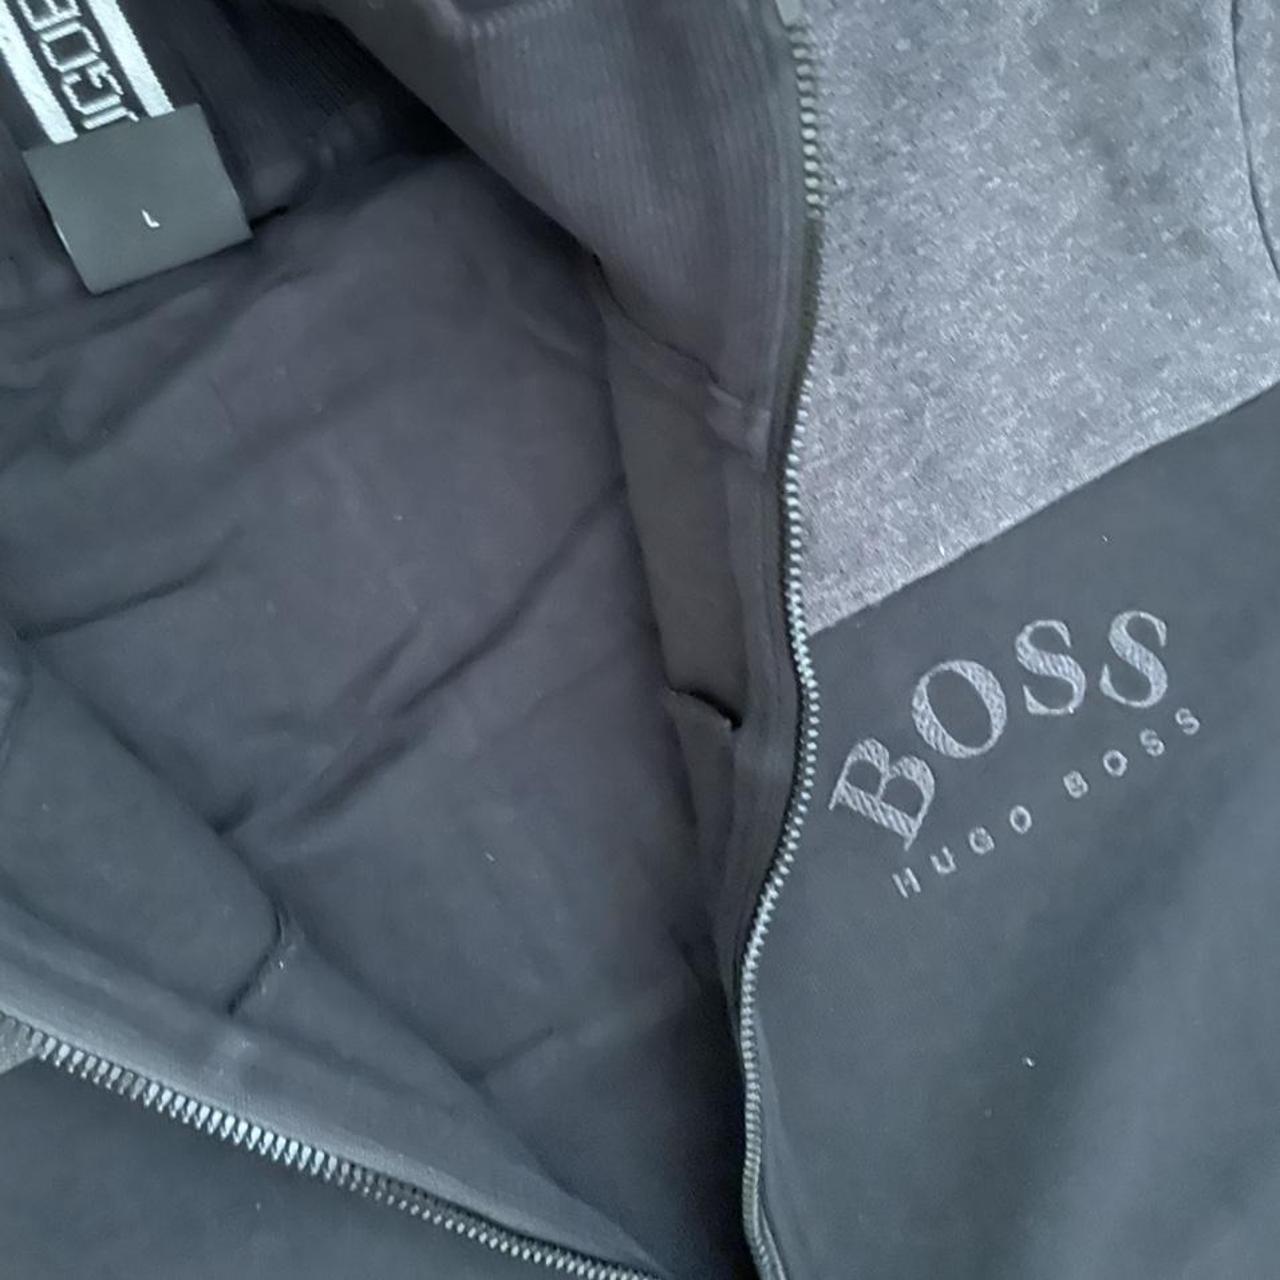 Vintage Hugo Boss Two Tone Jacket Size: Large... - Depop